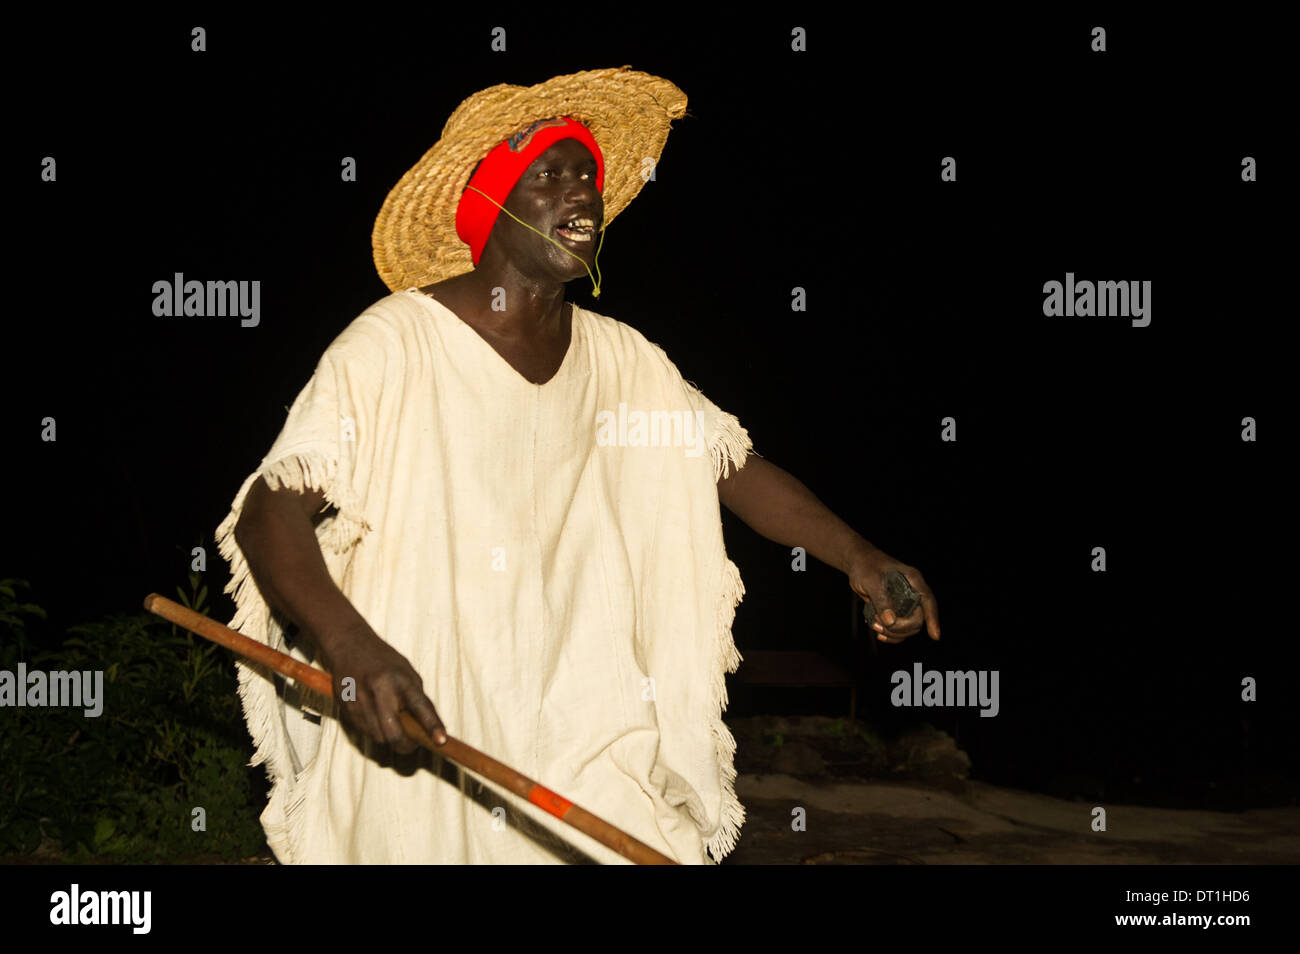 Dancer performing at night, Tendaba, the Gambia Stock Photo